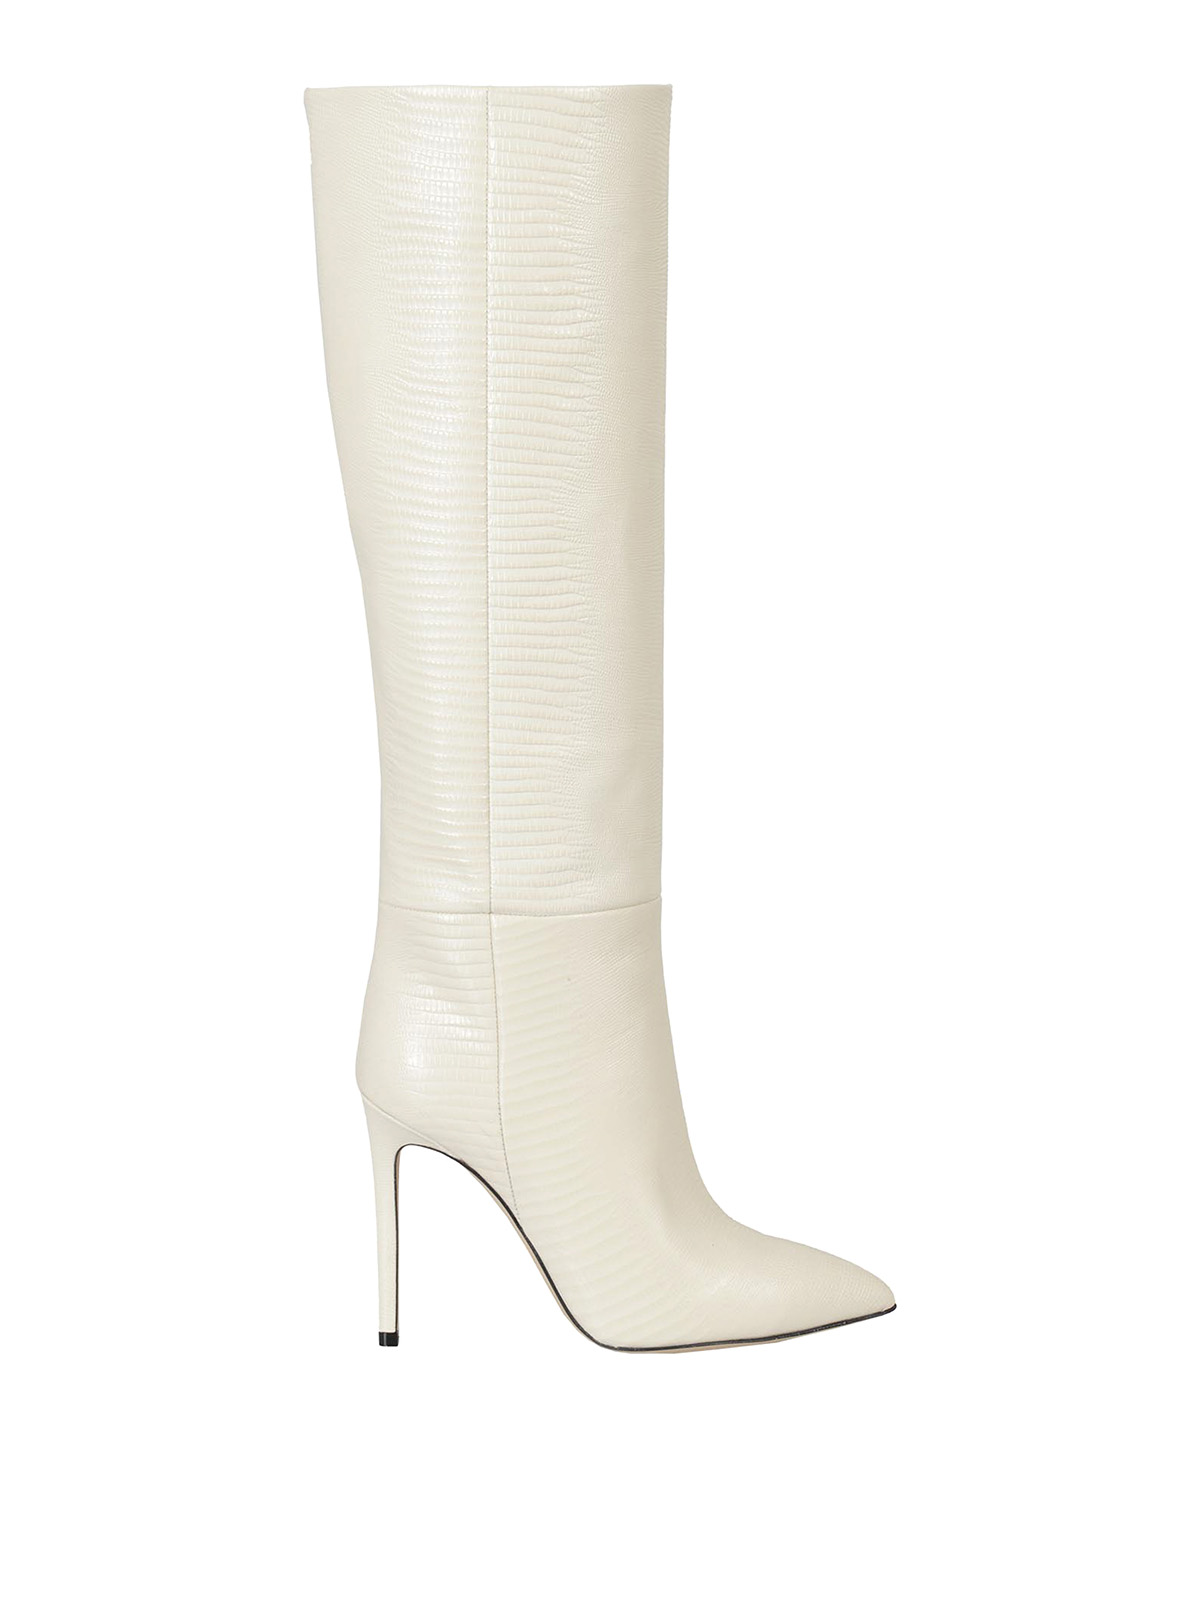 Paris Texas - Stiletto heel boots - boots - PX133VANILLA | iKRIX.com